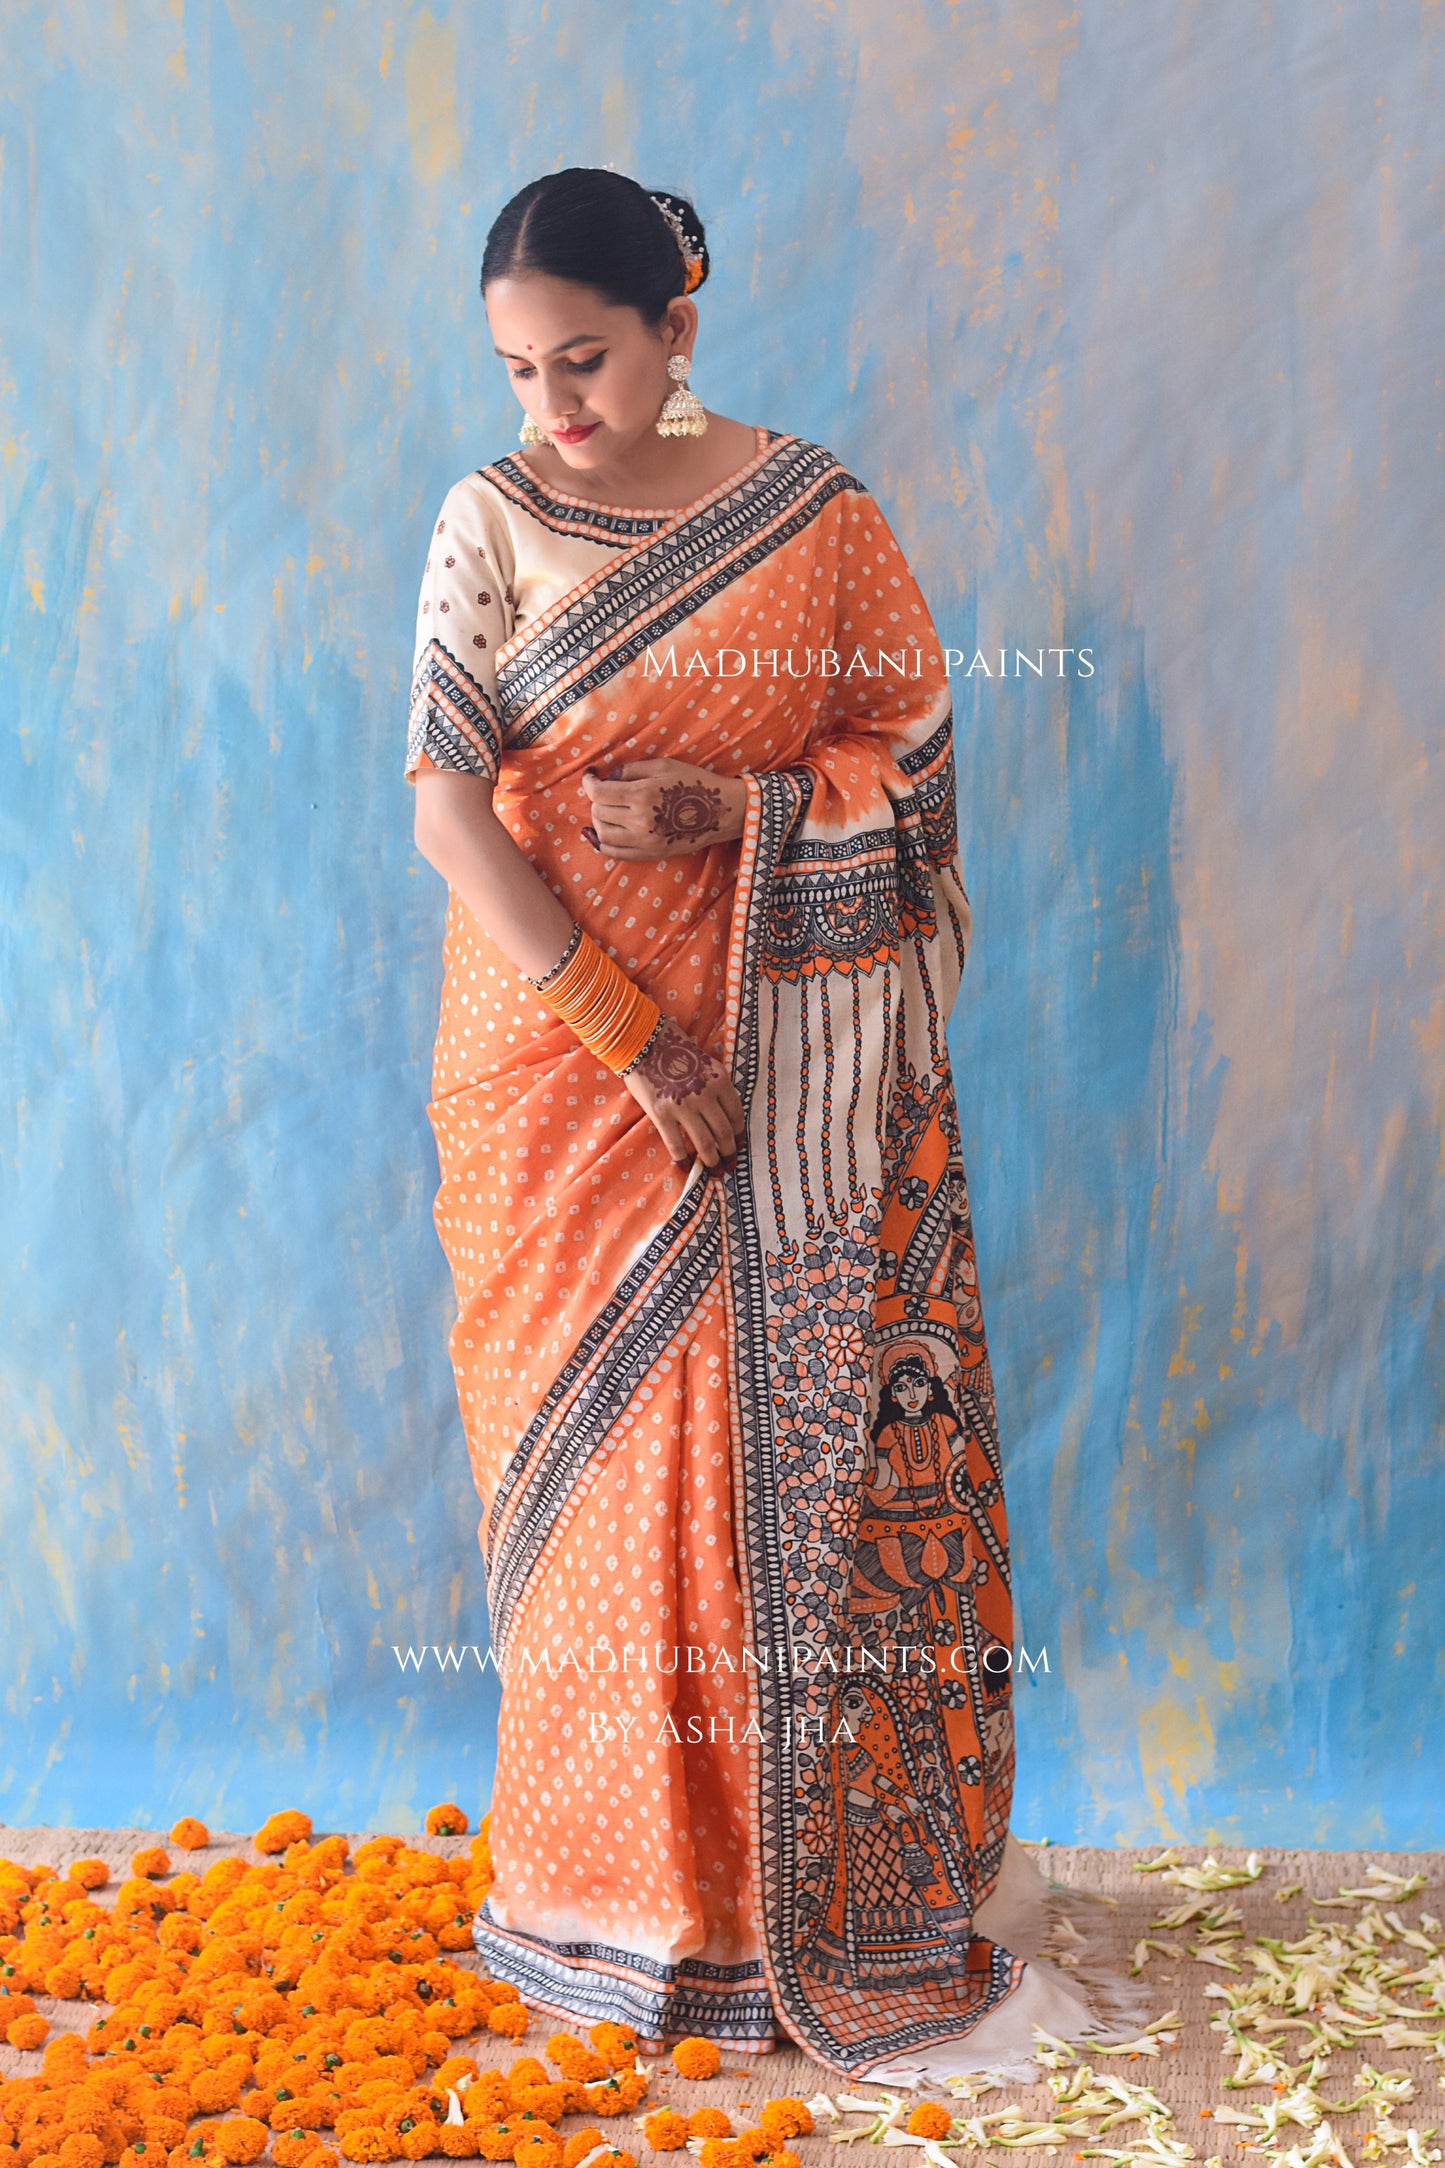 KAMLAKSHI Hand-painted Madhubani Bandhini Tussar Silk Saree Blouse Set